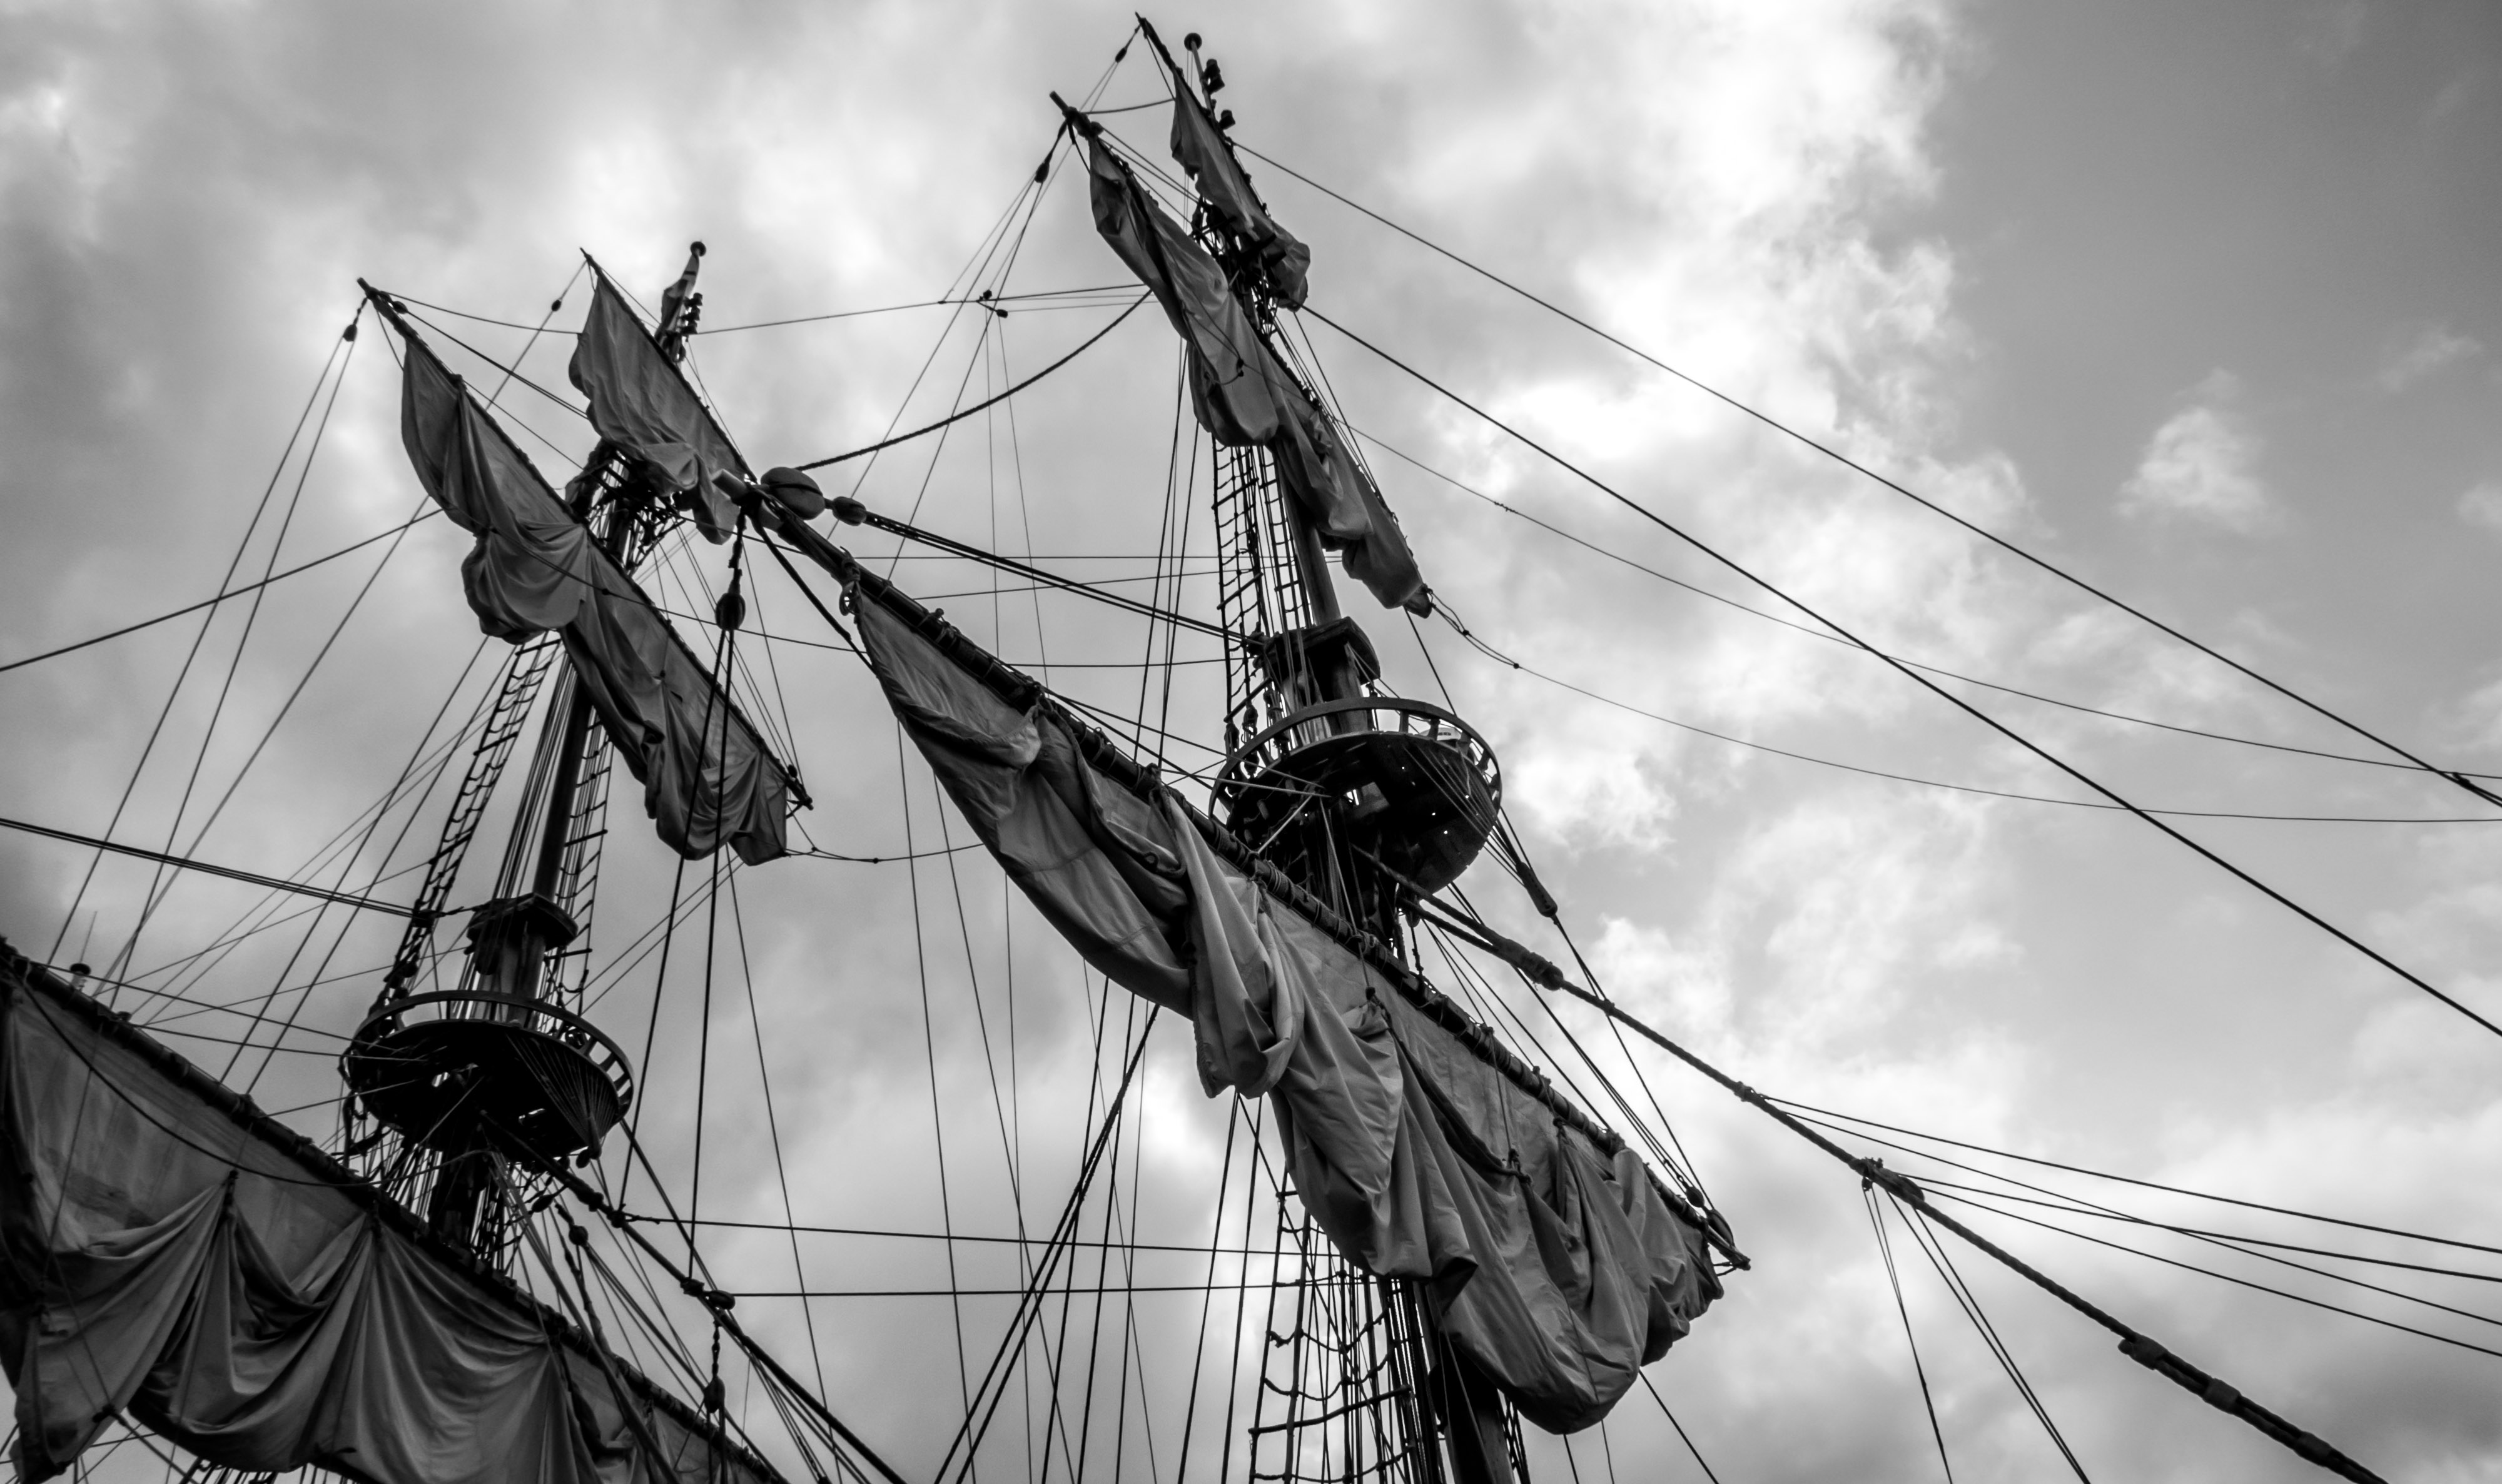 Sailing ship's masts with sails photo